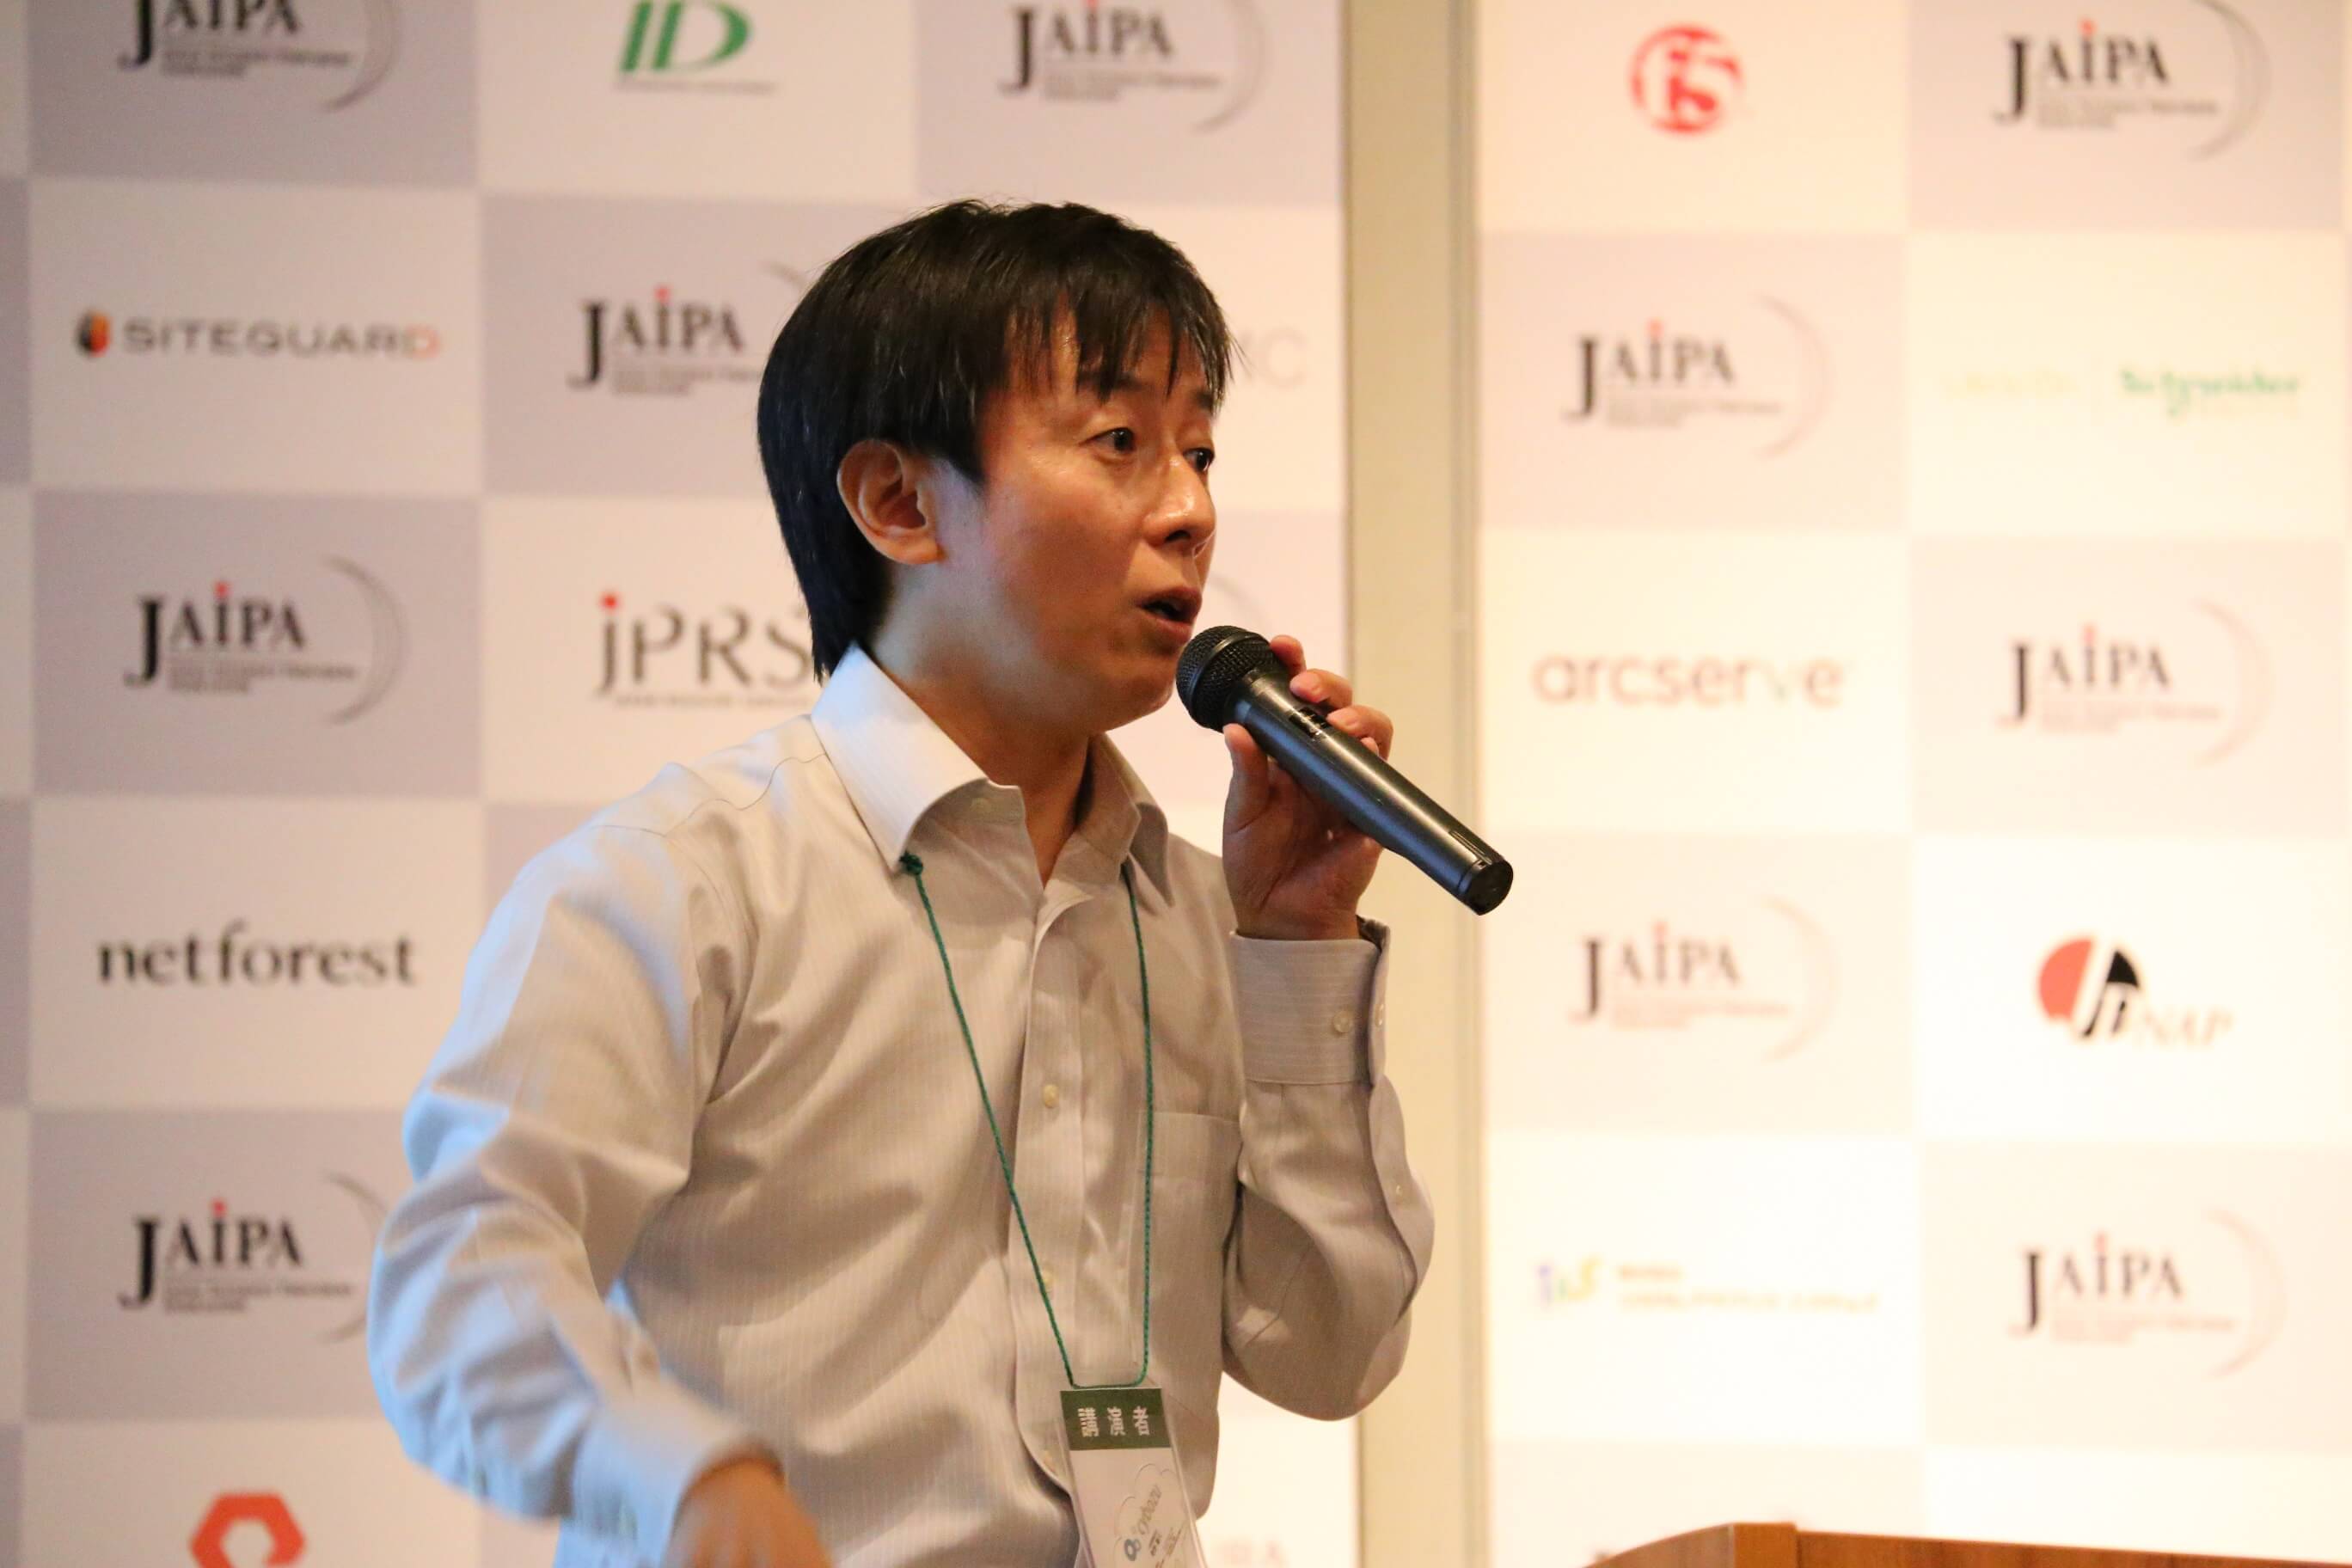 JAIPA Cloud Conference 2017 イベントの様子